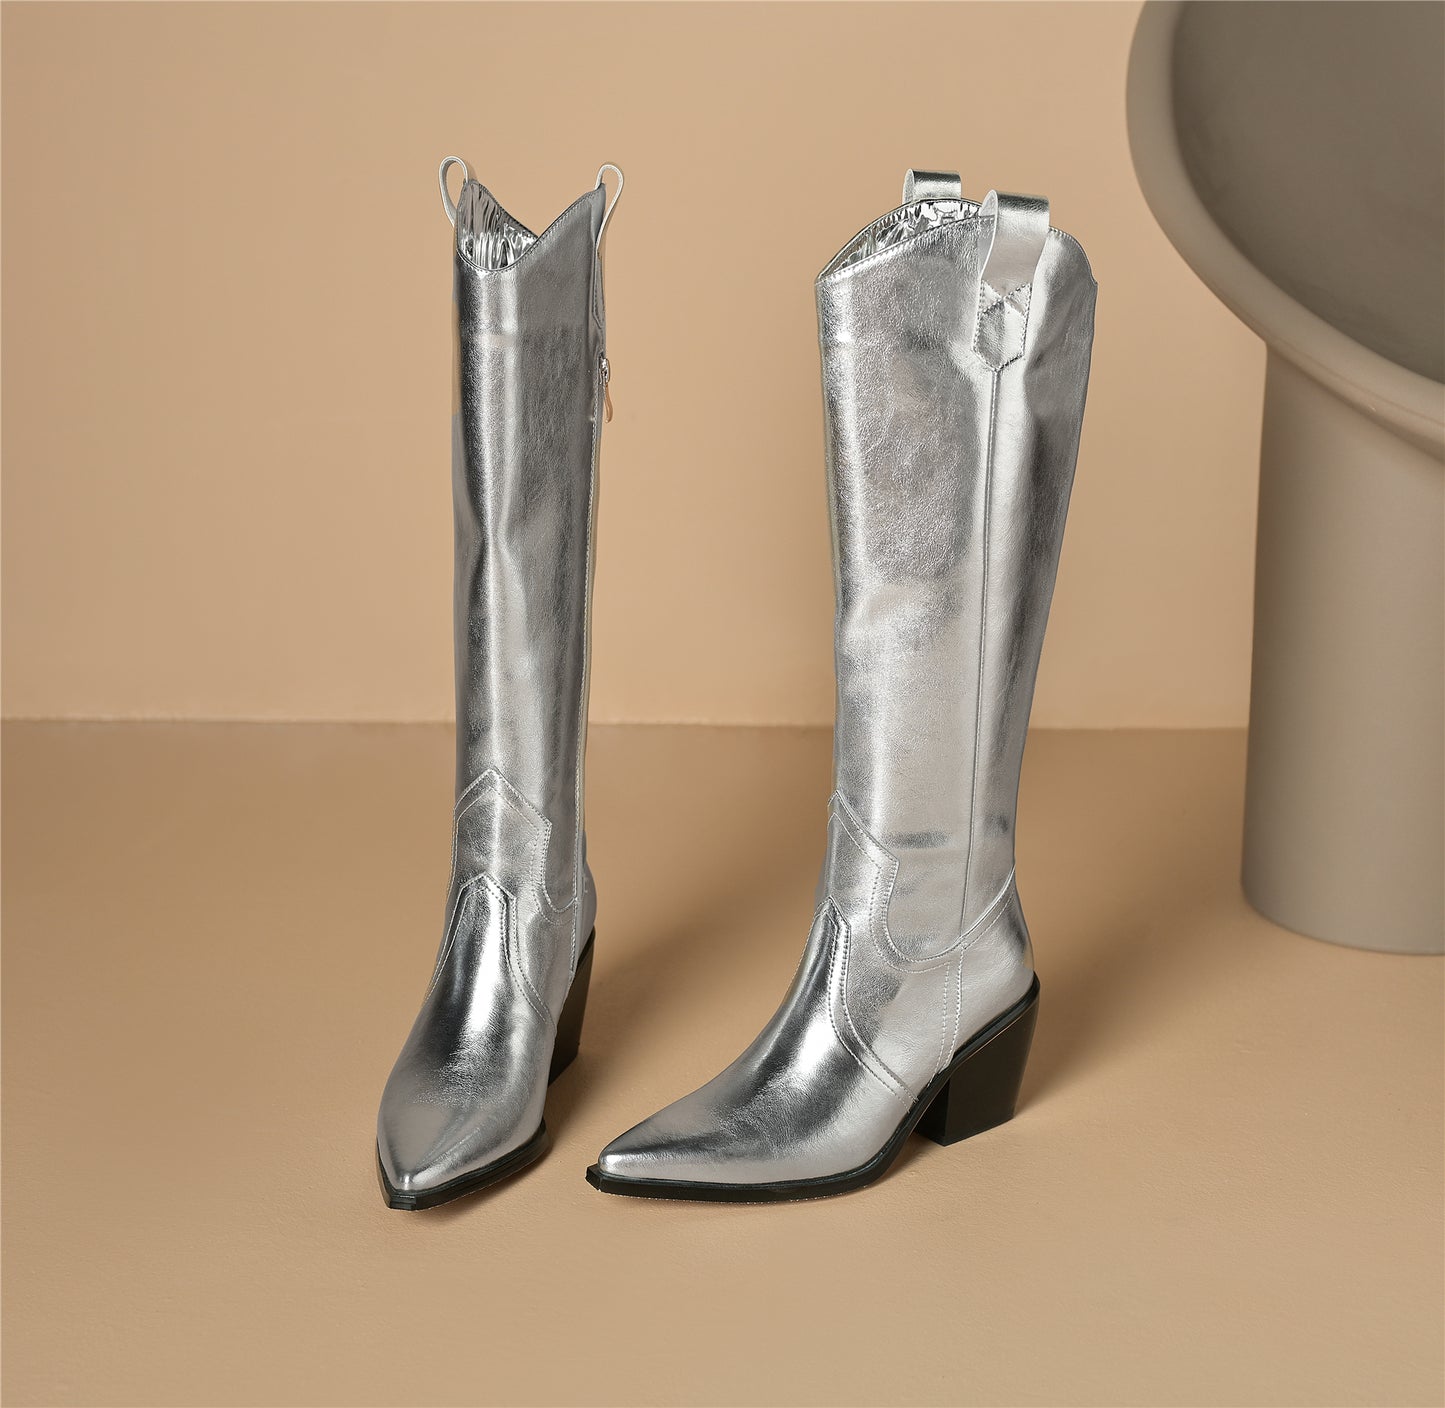 TinaCus Women's Pointed Toe Genuine Leather Jean Faric Handmade Block Heel Knee High Boots